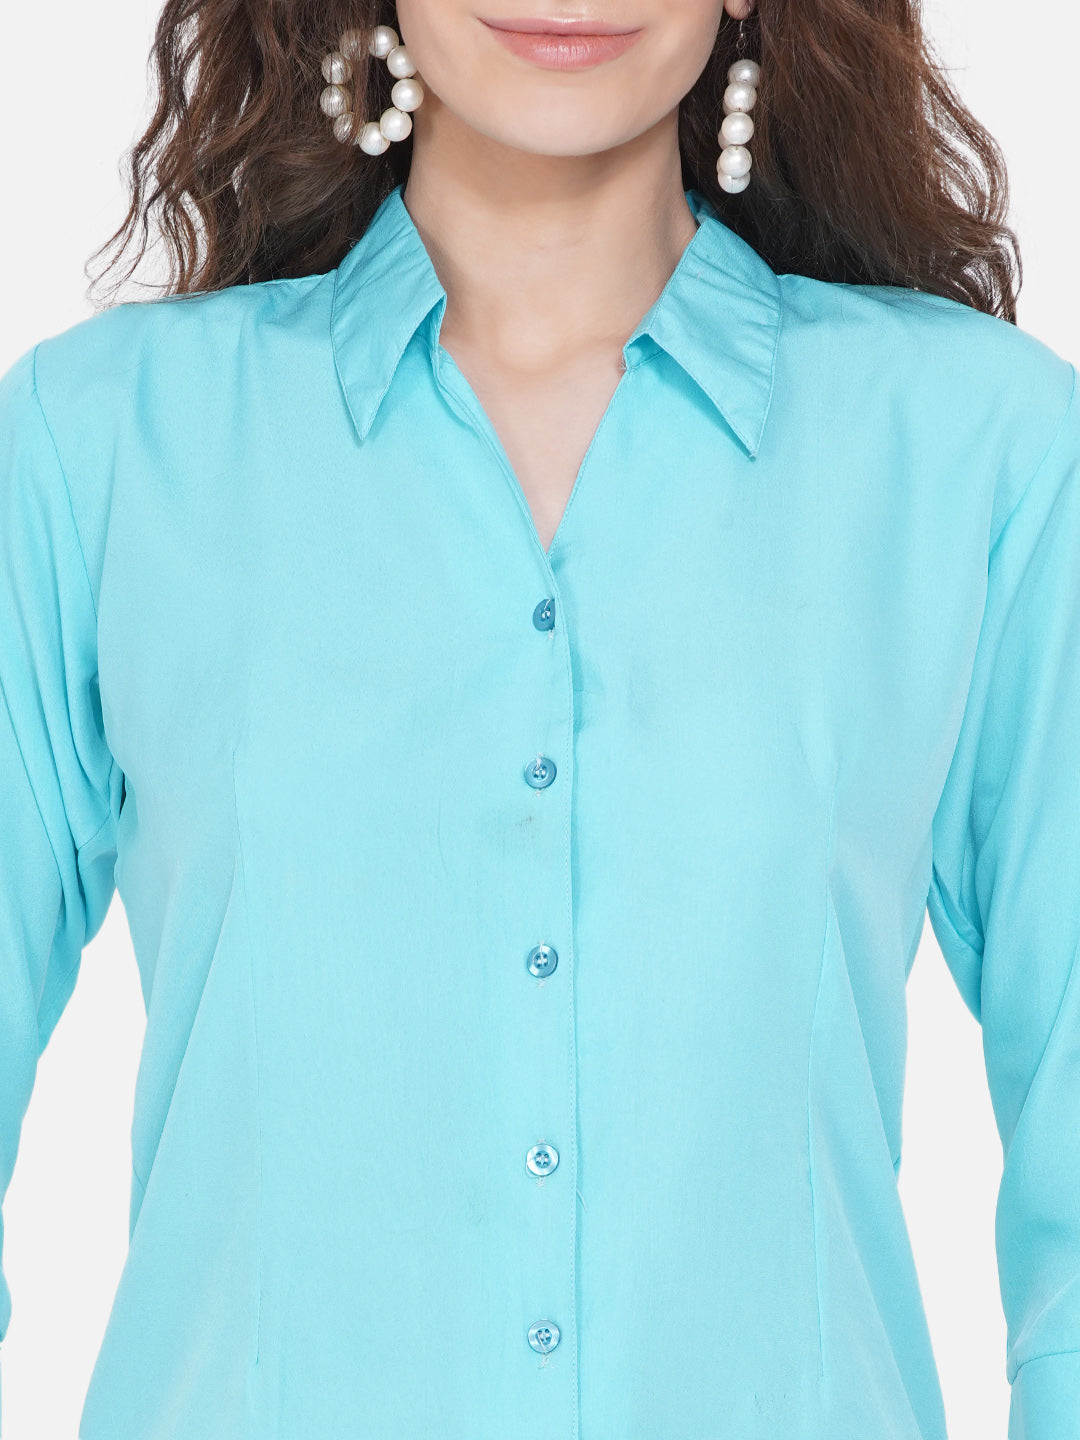 Women's Turquoise Blue Casual Shirt - Wahe-Noor